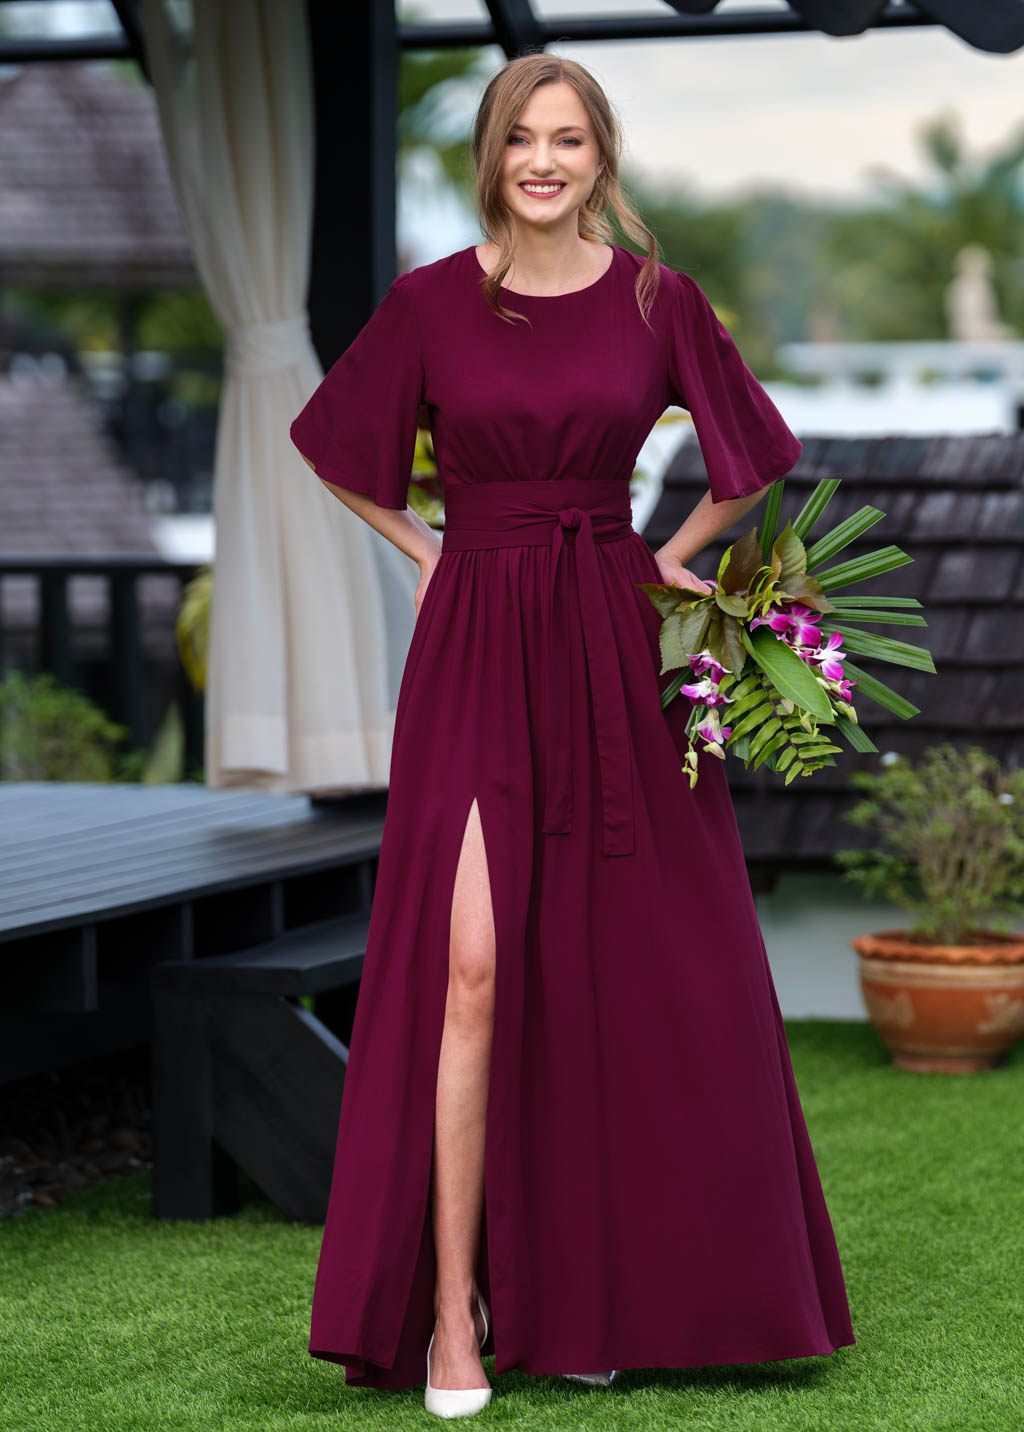 Burgundy long dress with belt